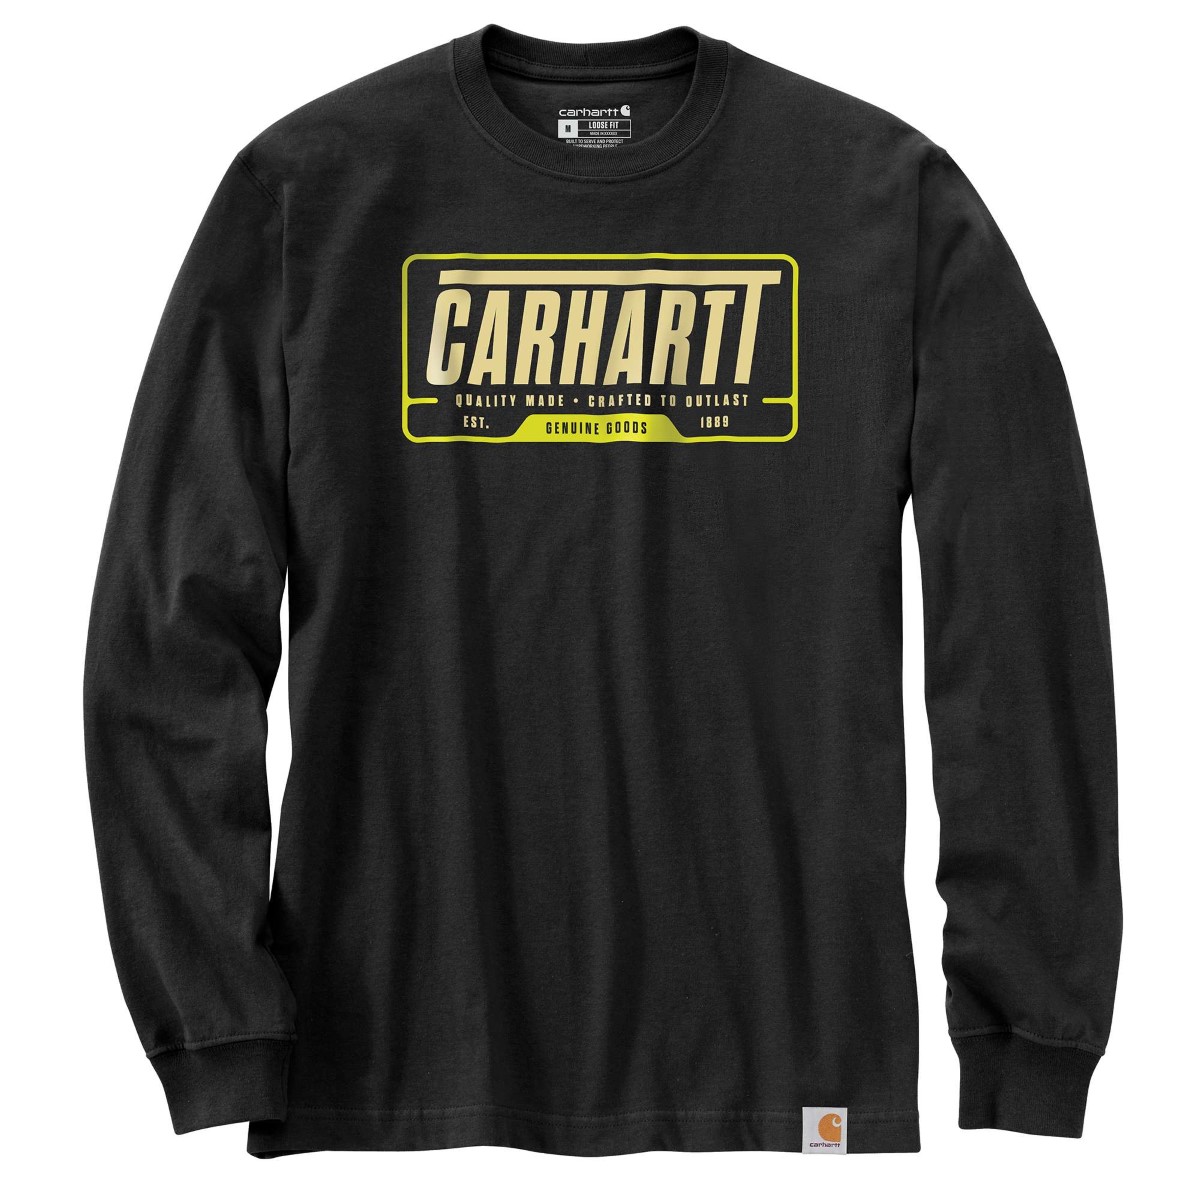 Carhartt Men's 105954 Loose Fit Heavyweight Long-Sleeve Outlast Graphic Tee